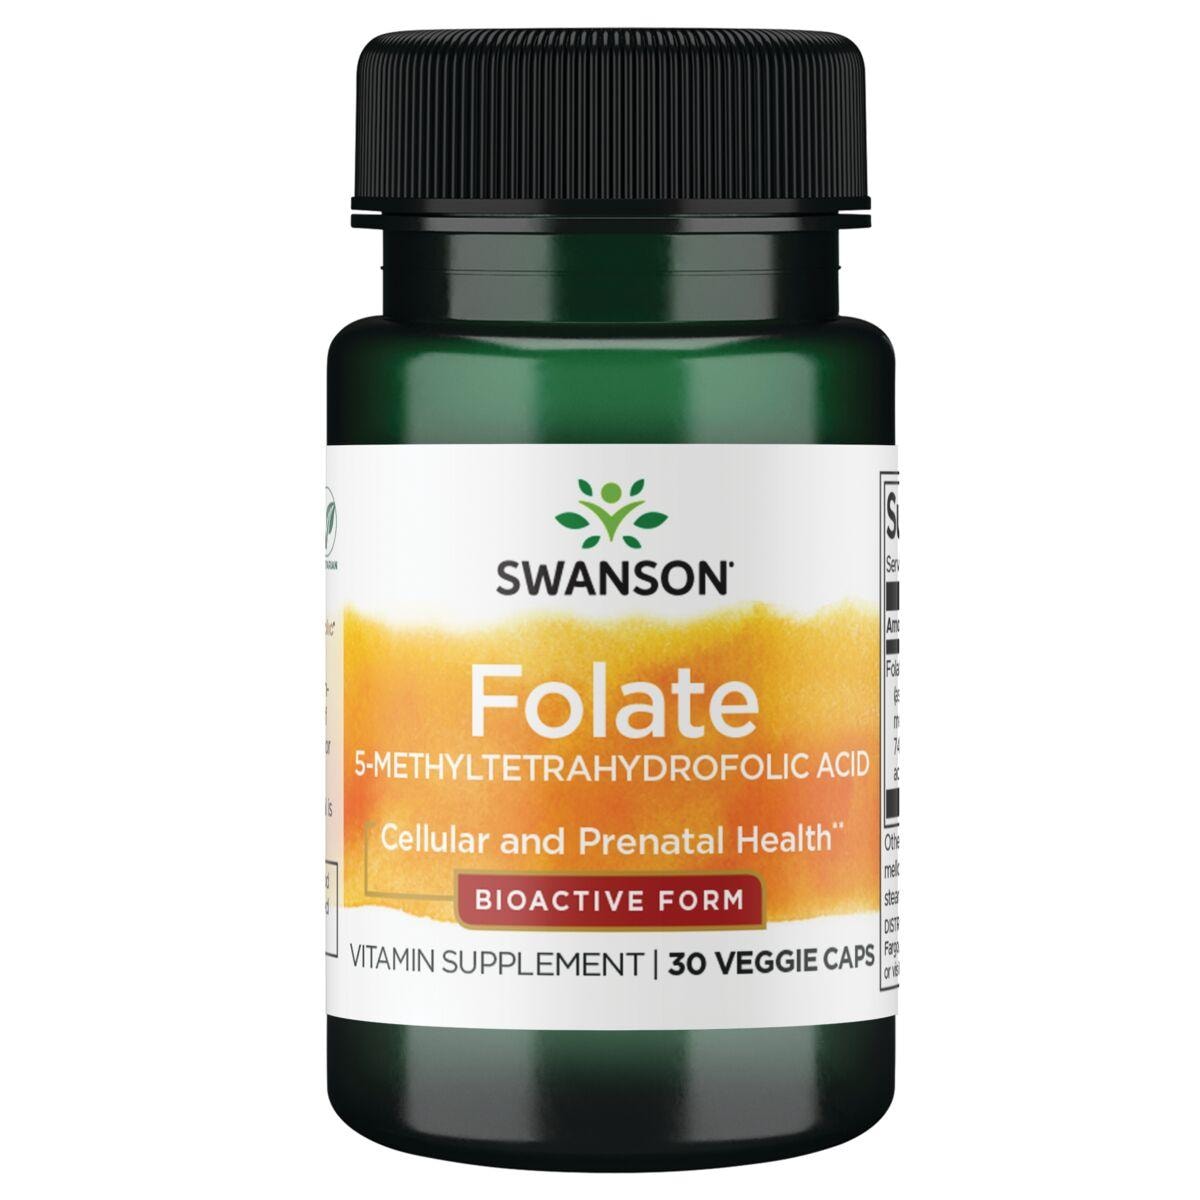 Swanson Ultra Folate 5-Methyltetrahydrofolic Acid - Bioactive Form Vitamin | 680 mcg Dfe | 30 Veg Caps